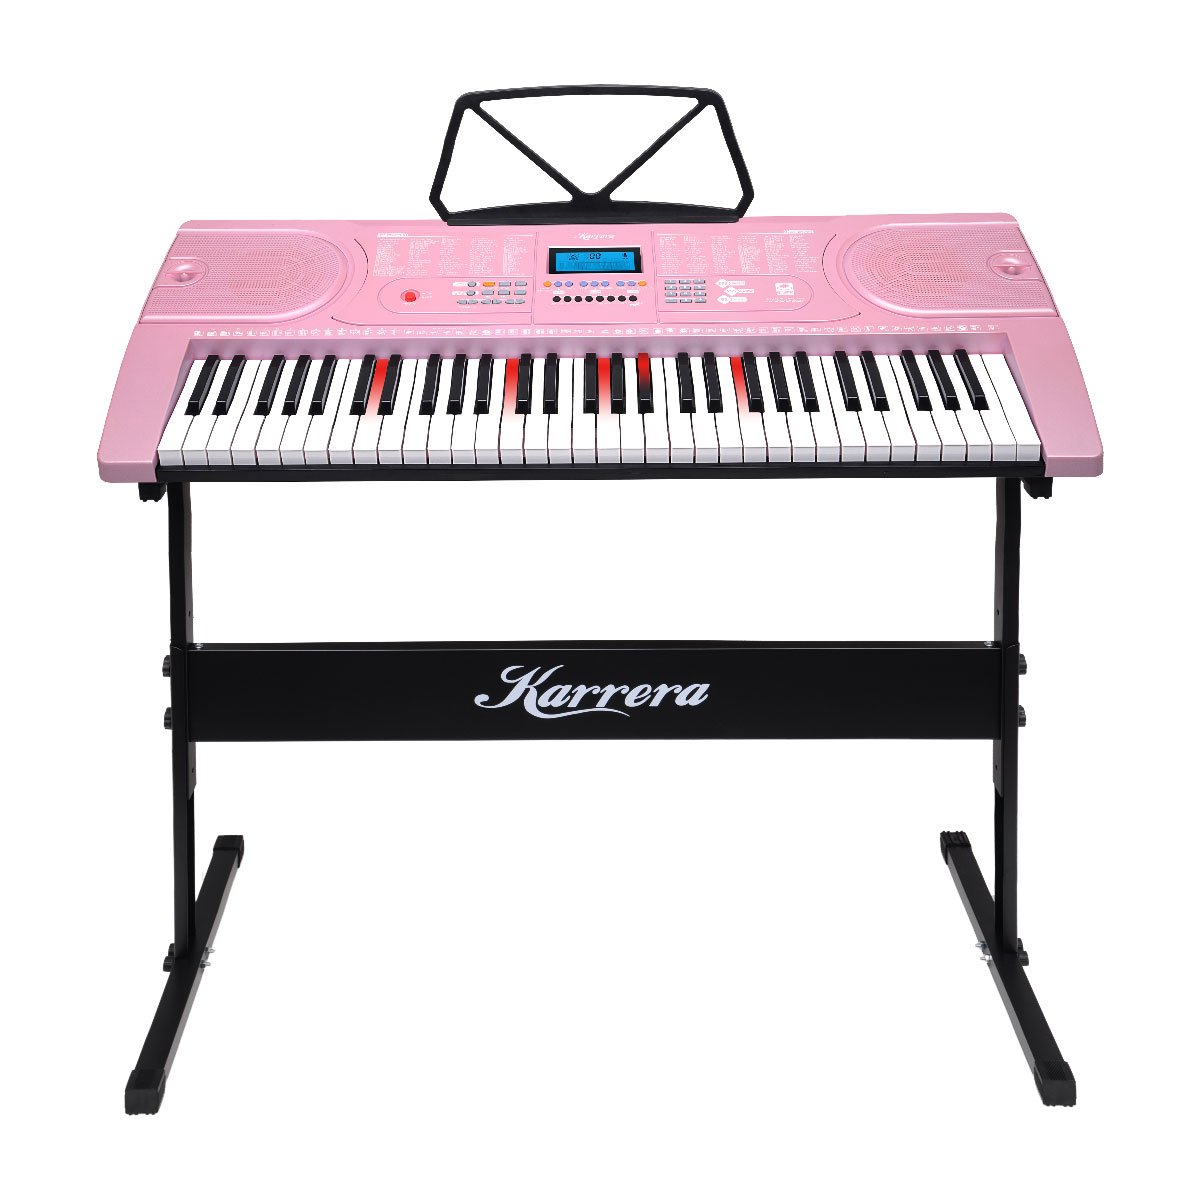 Karrera 61 Keys Electronic LED Piano Keyboard with Stand - Pink 2